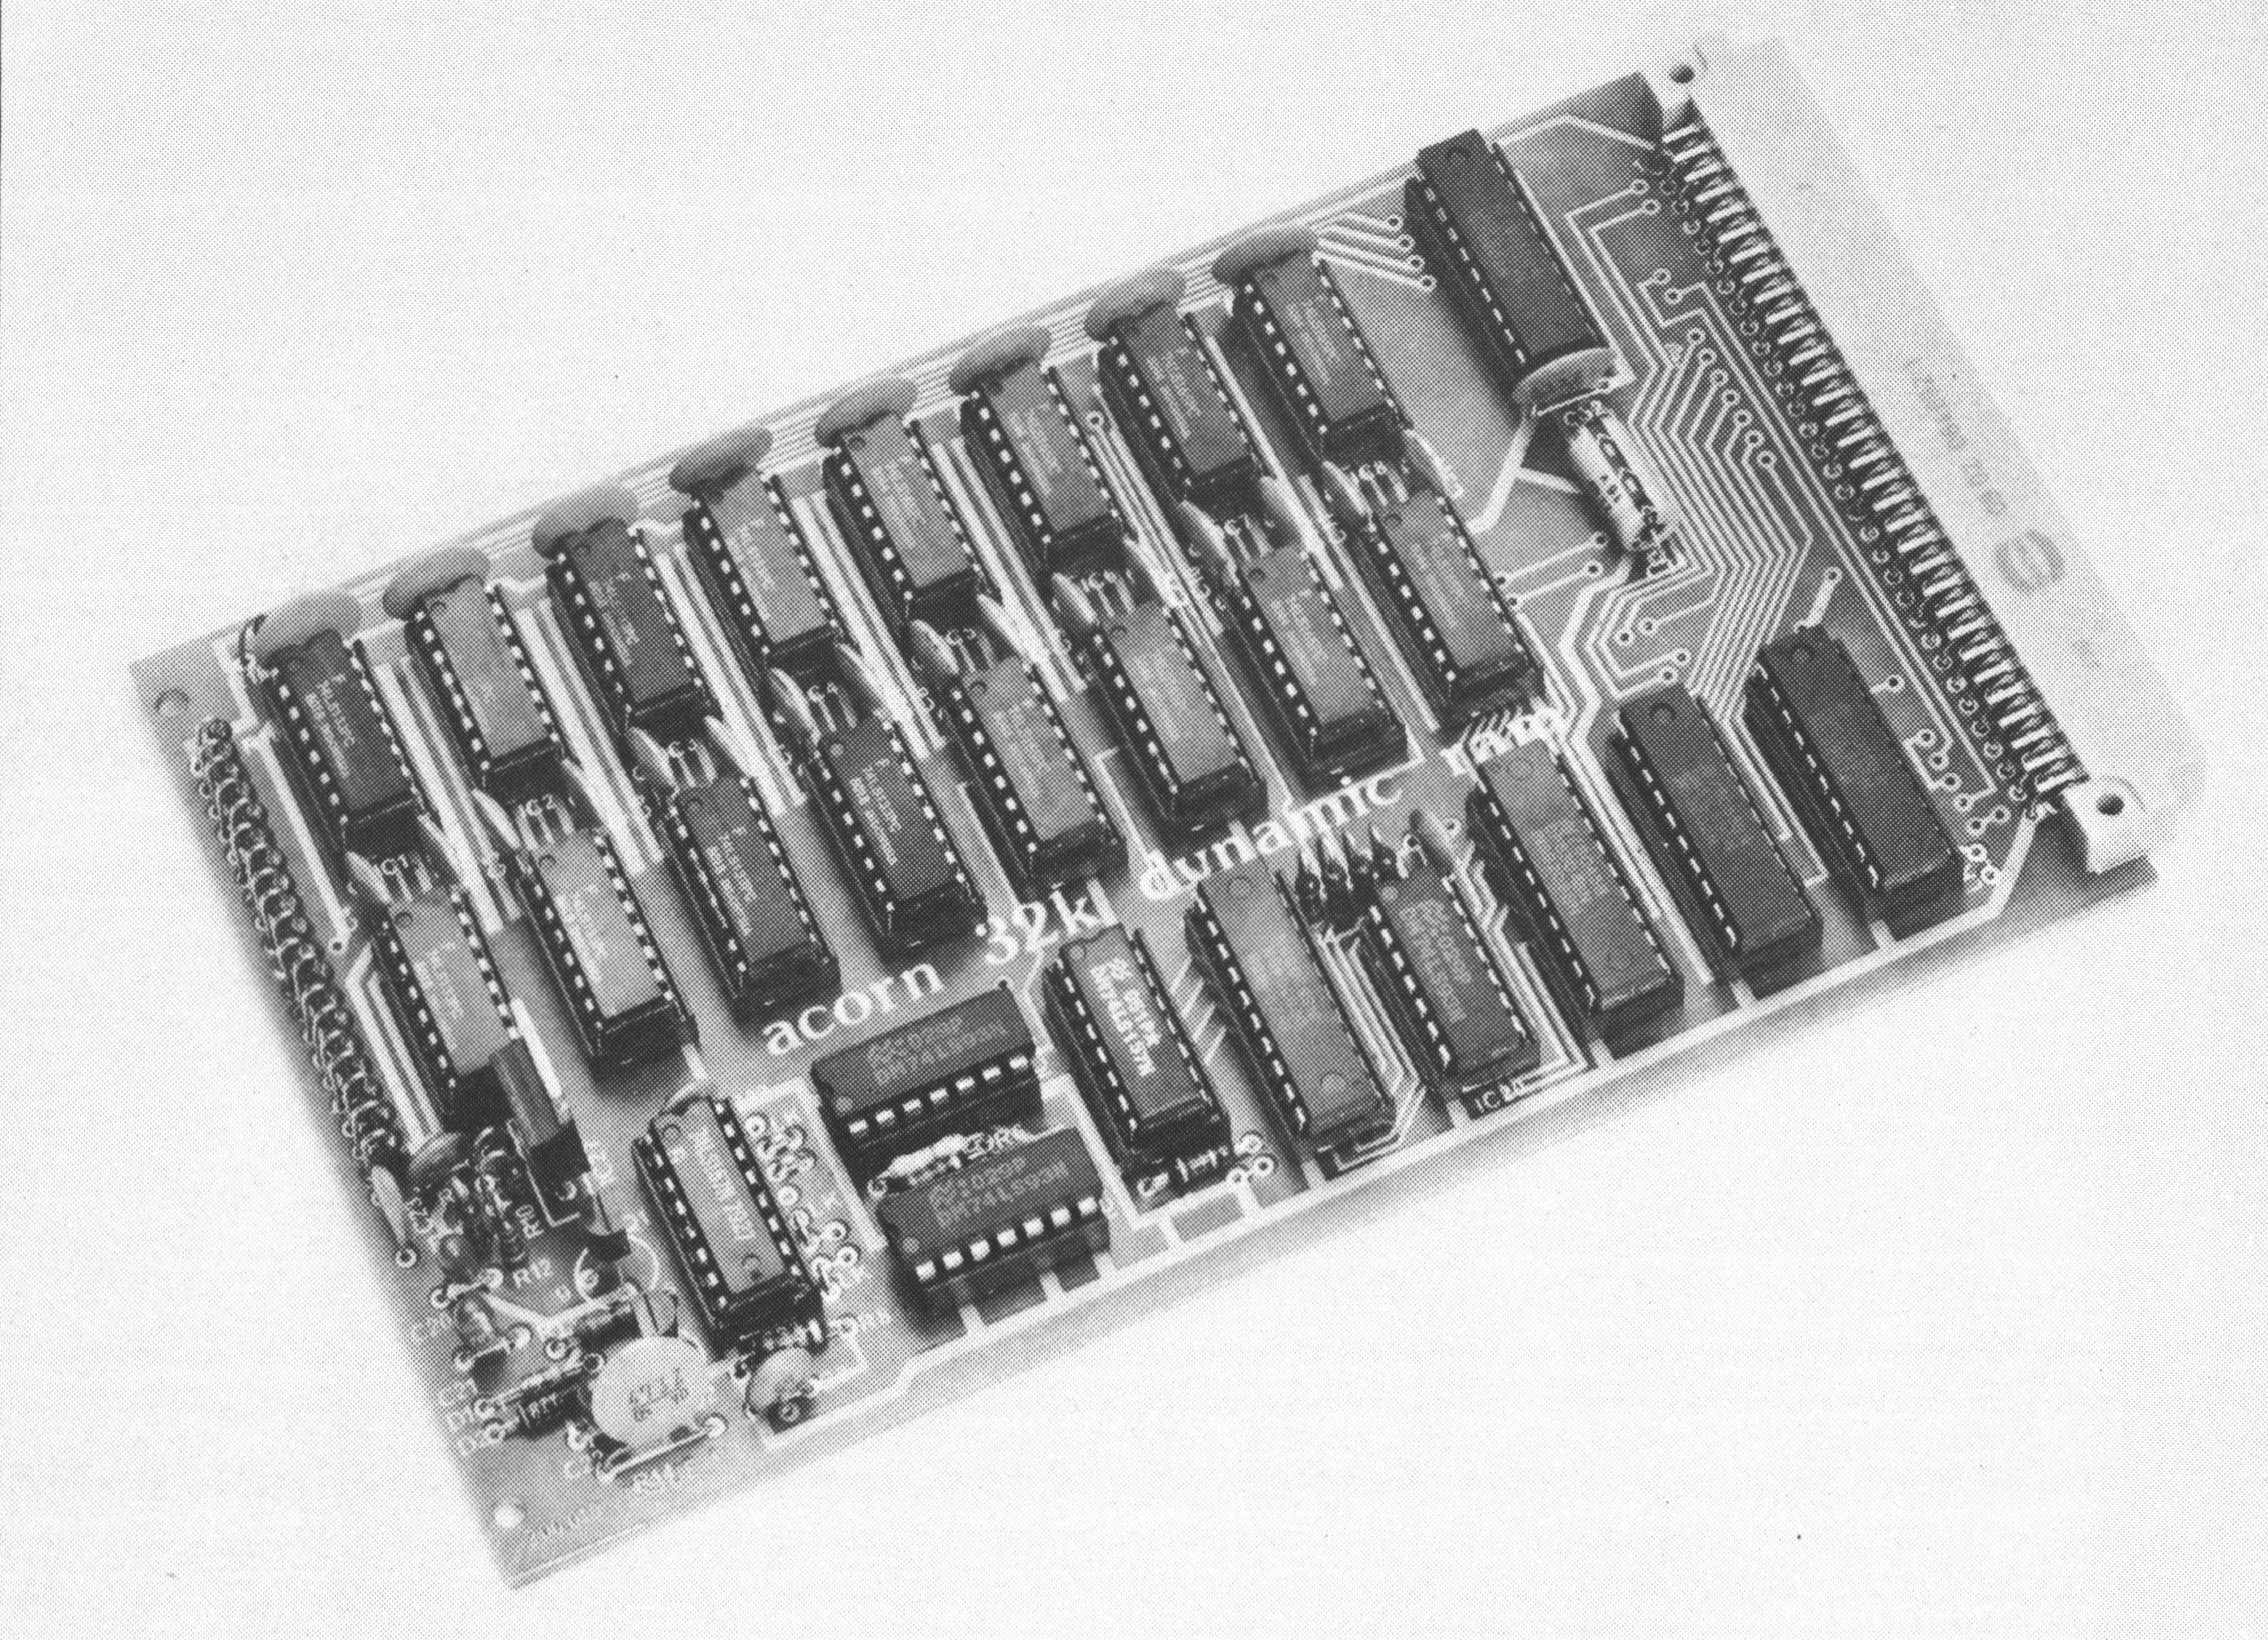 Acorn System 32K Dynamic RAM Board